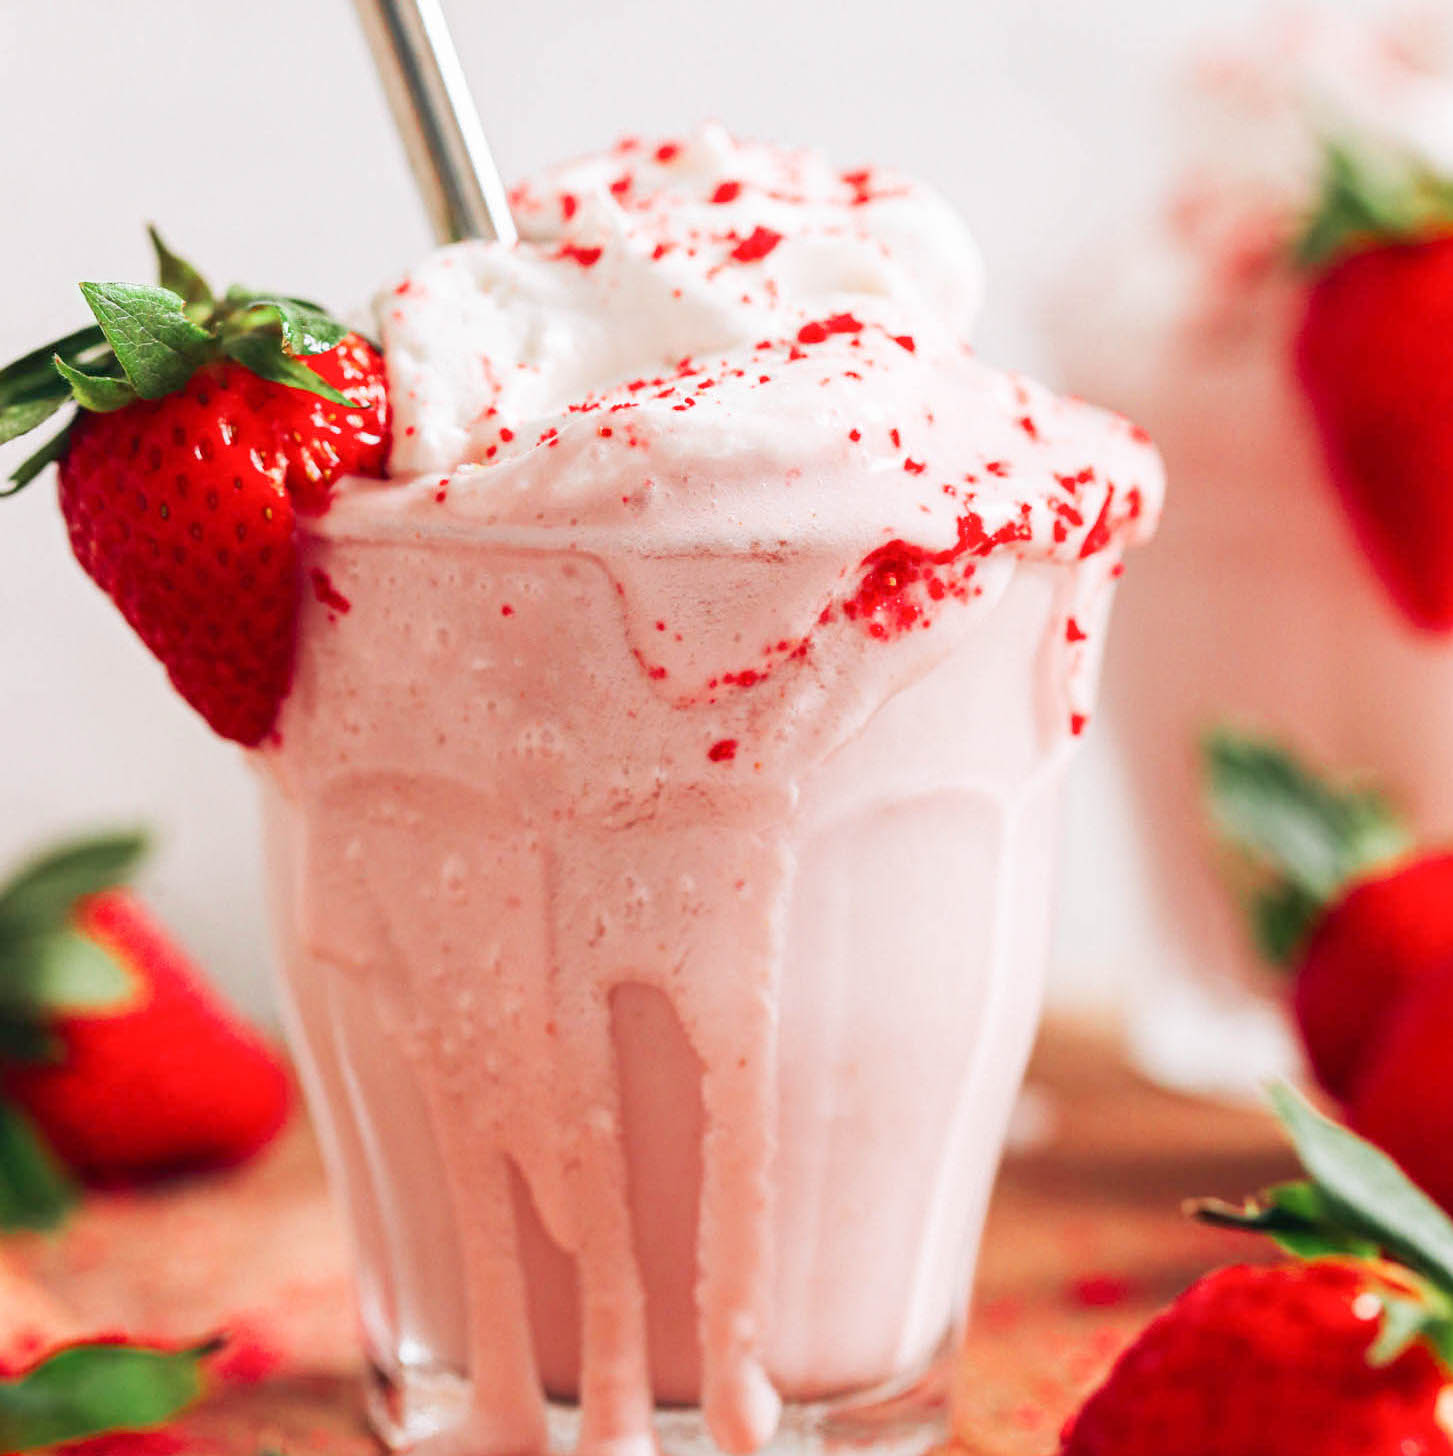 strawberry milkshake manicure pedicure